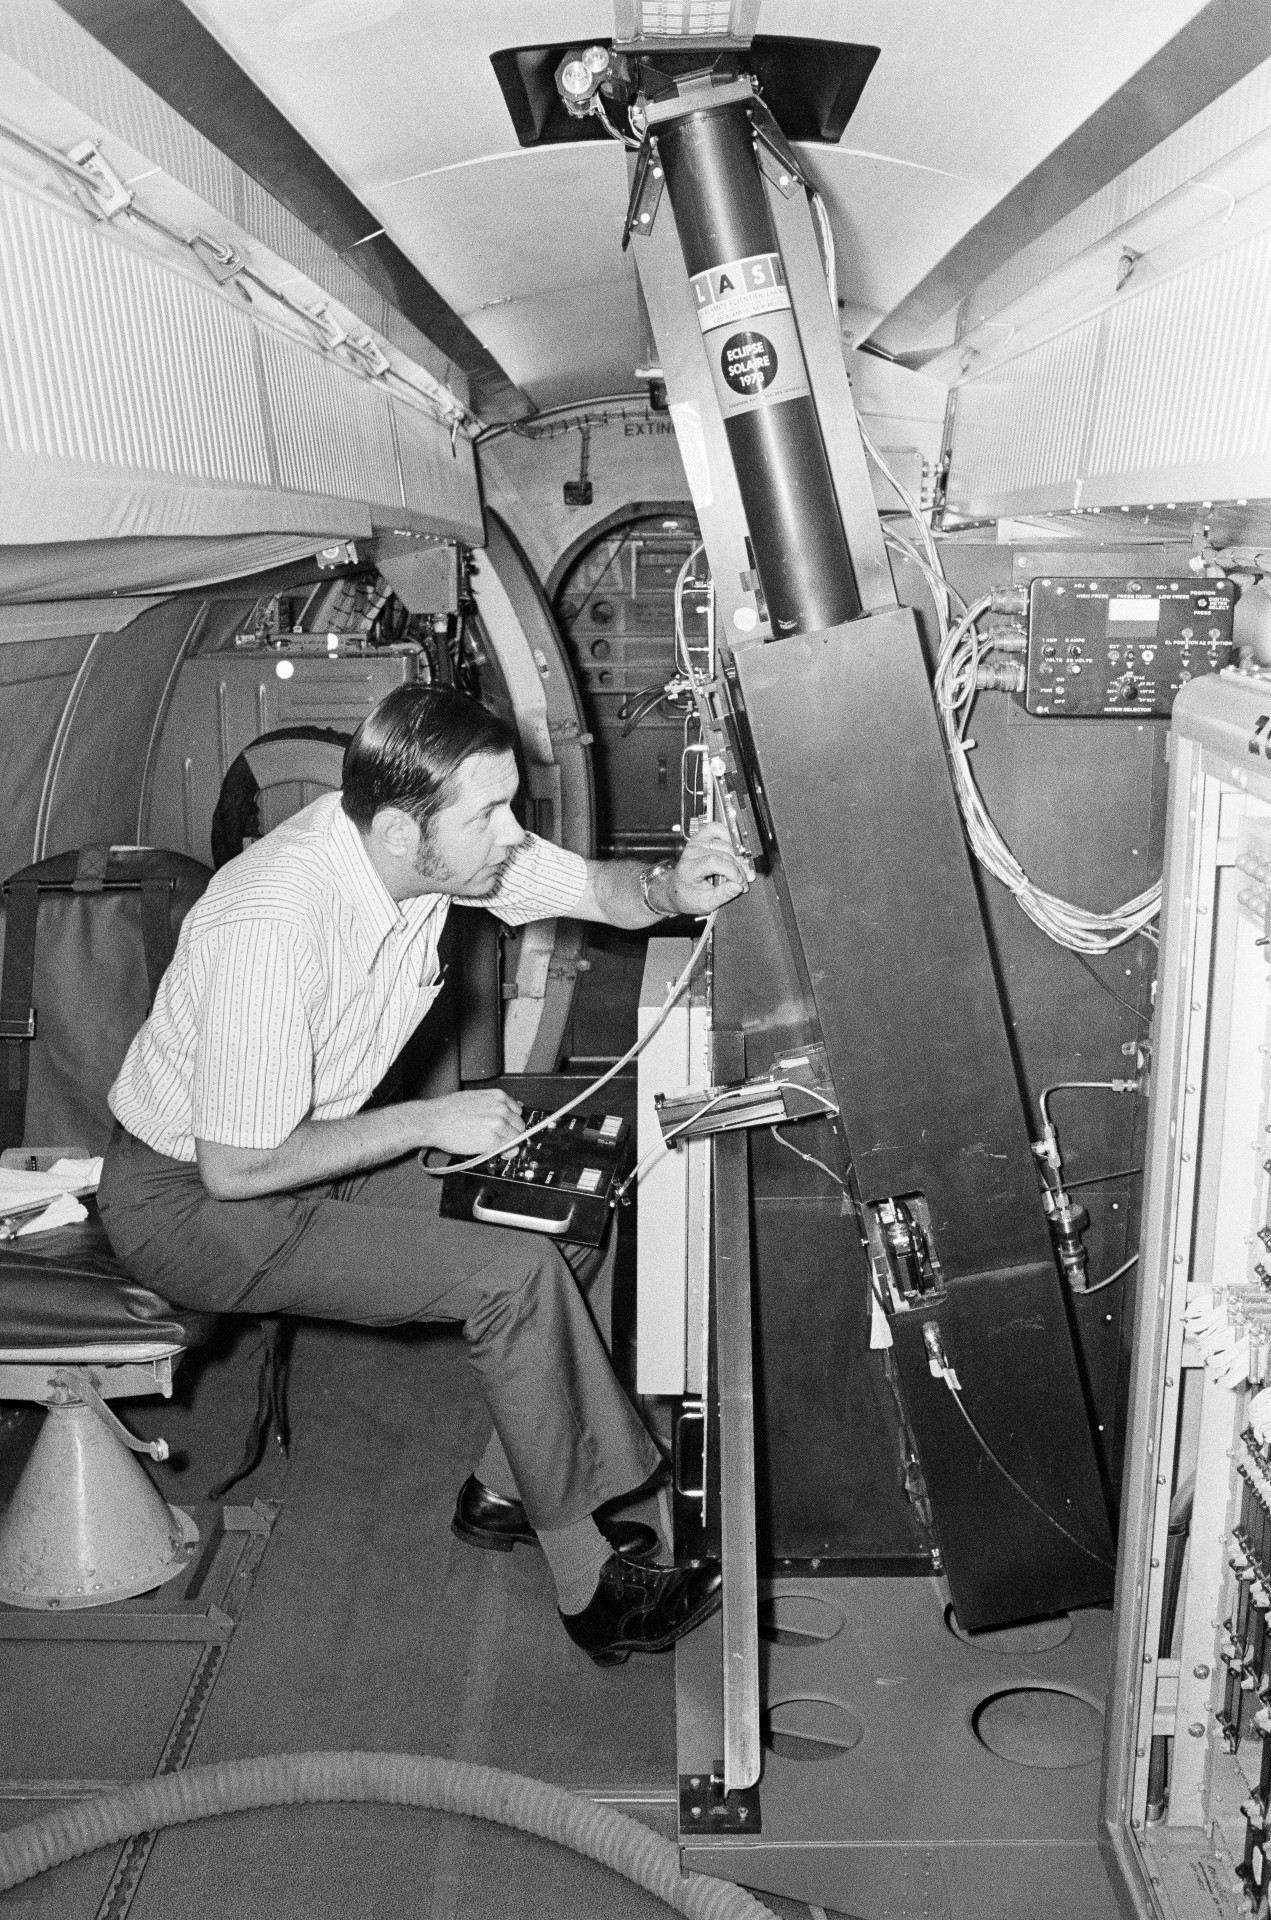 a man examines scientific equipment inside a cramped aircraft